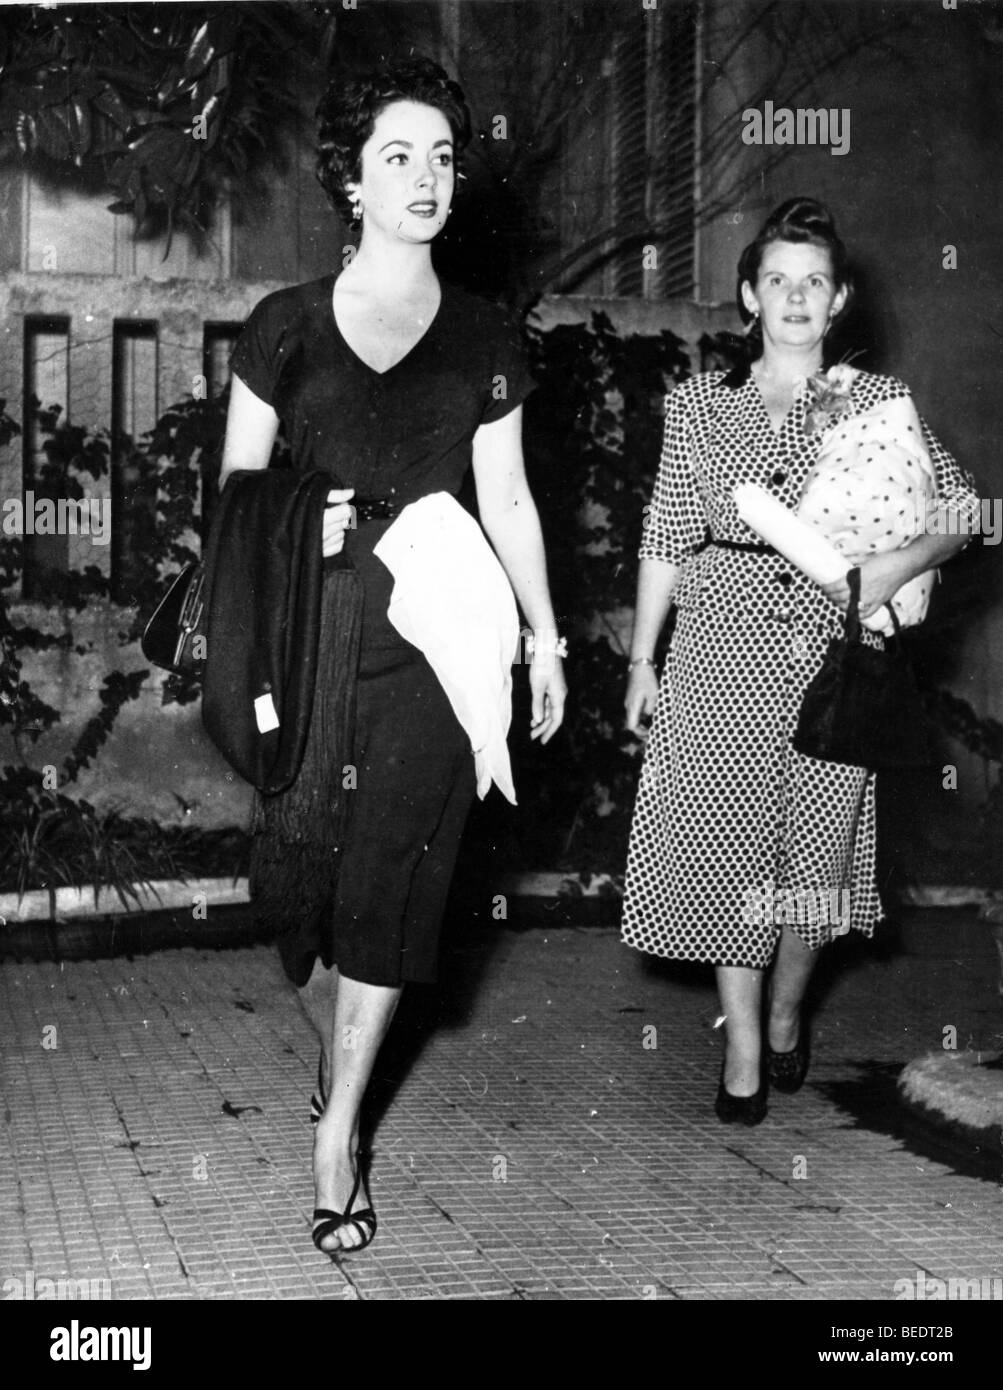 Actress Elizabeth Taylor leaving a building Stock Photo